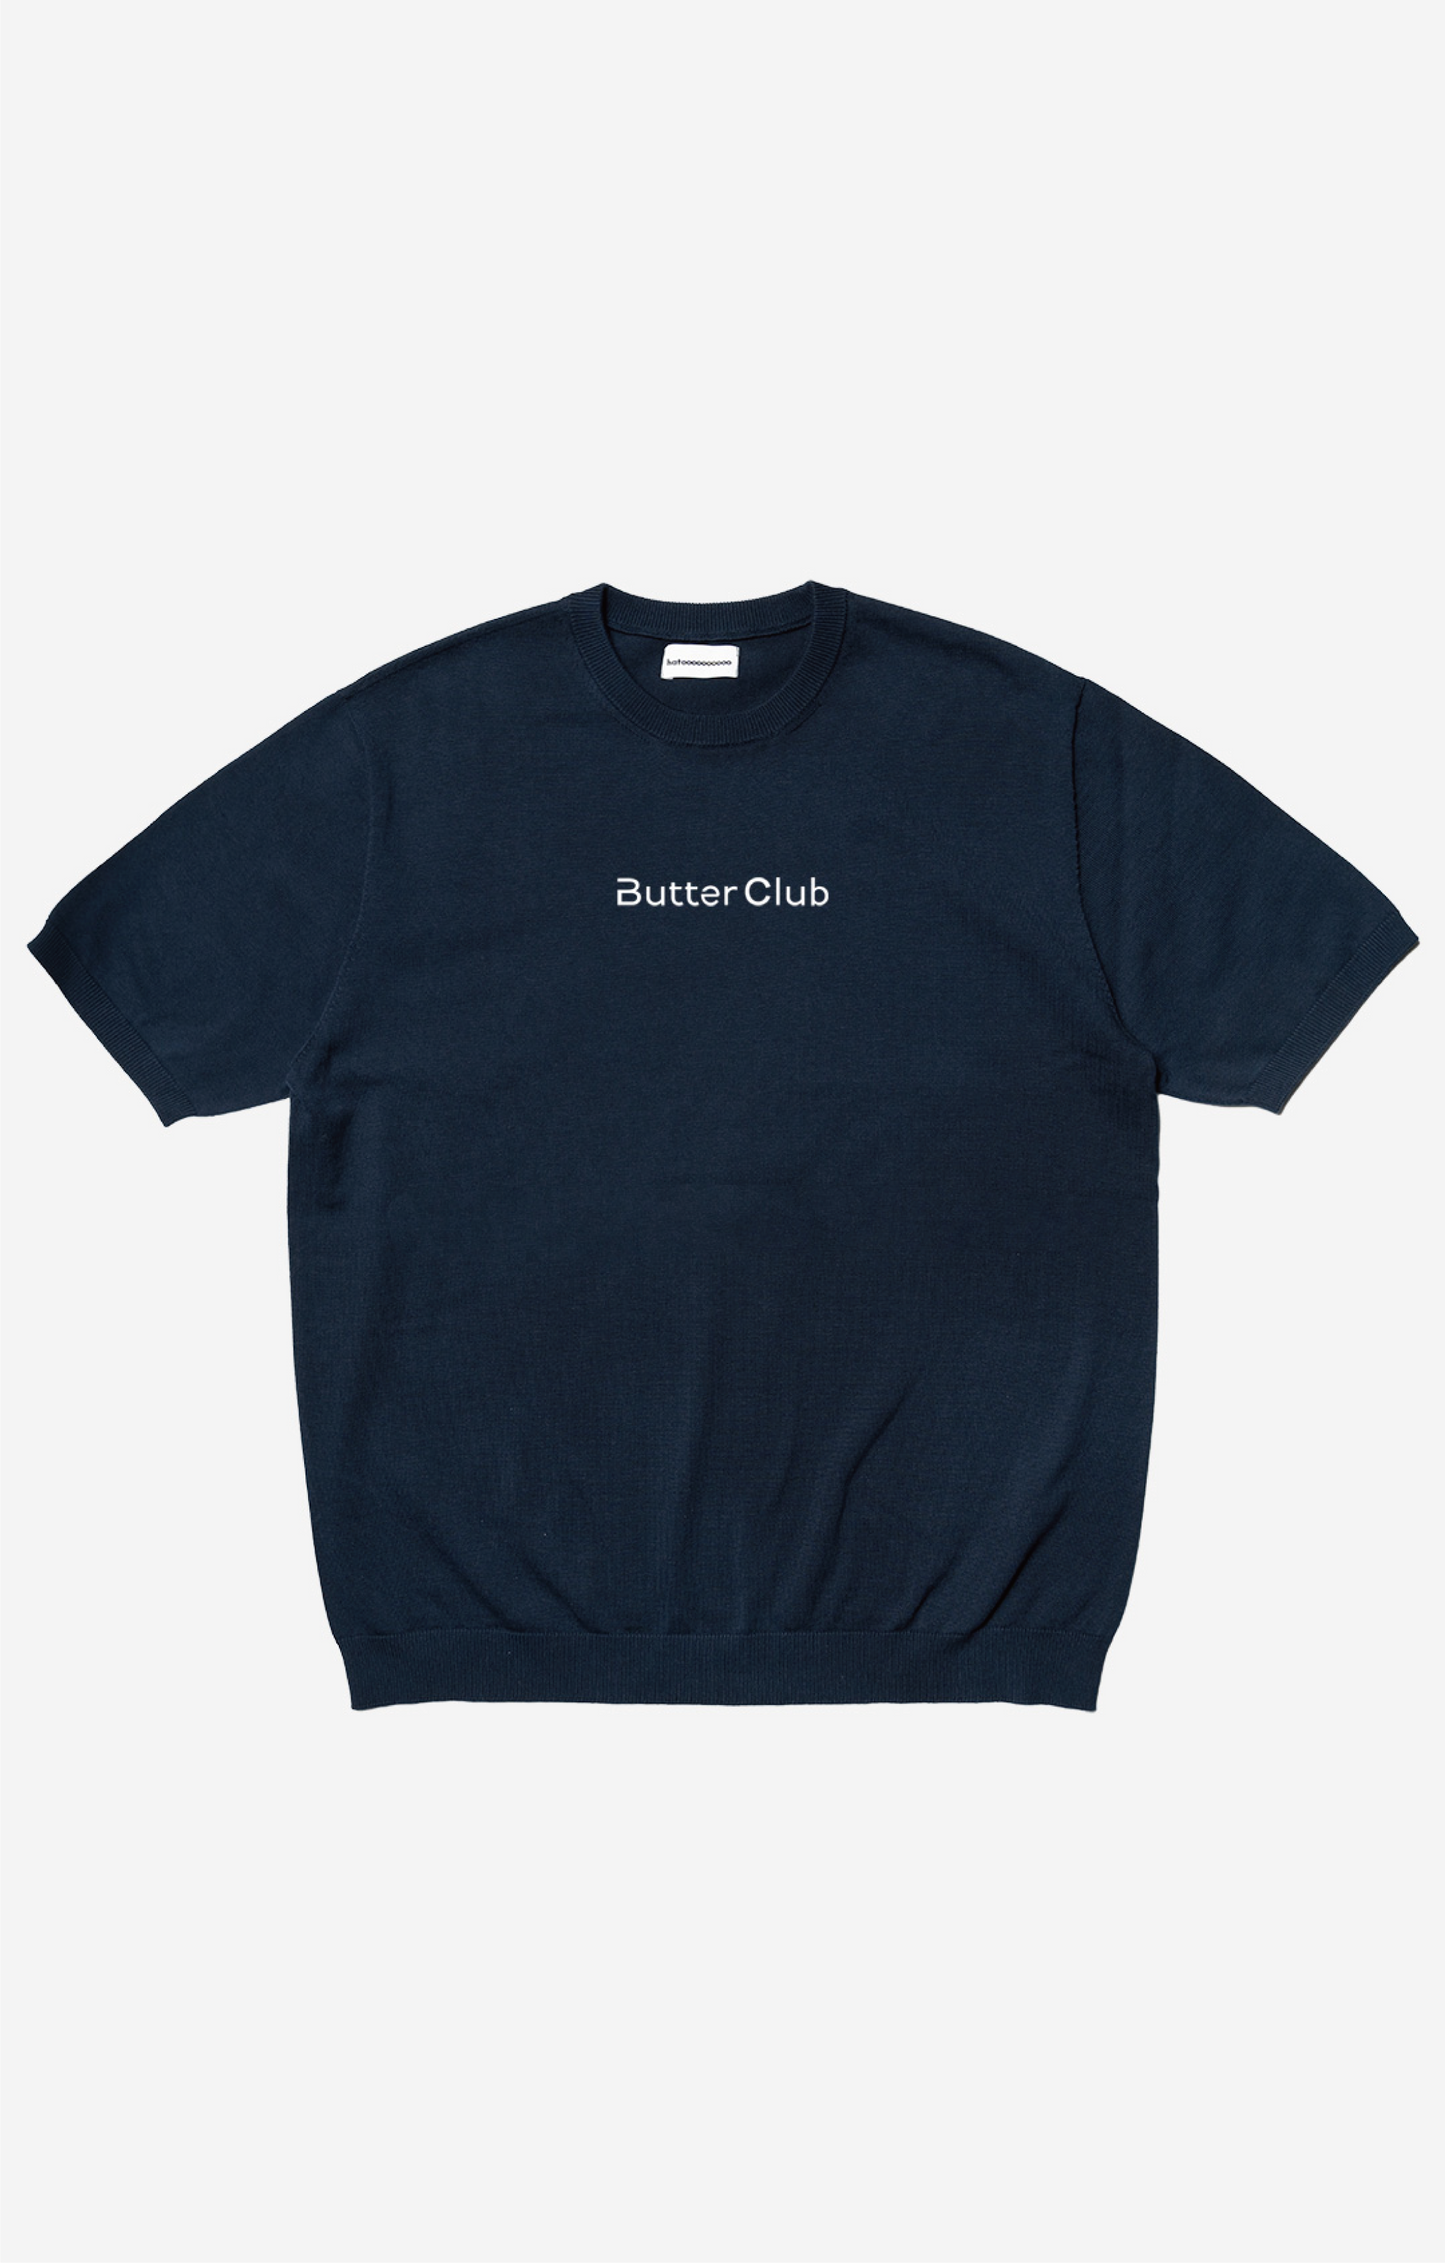 butter club tee unisex